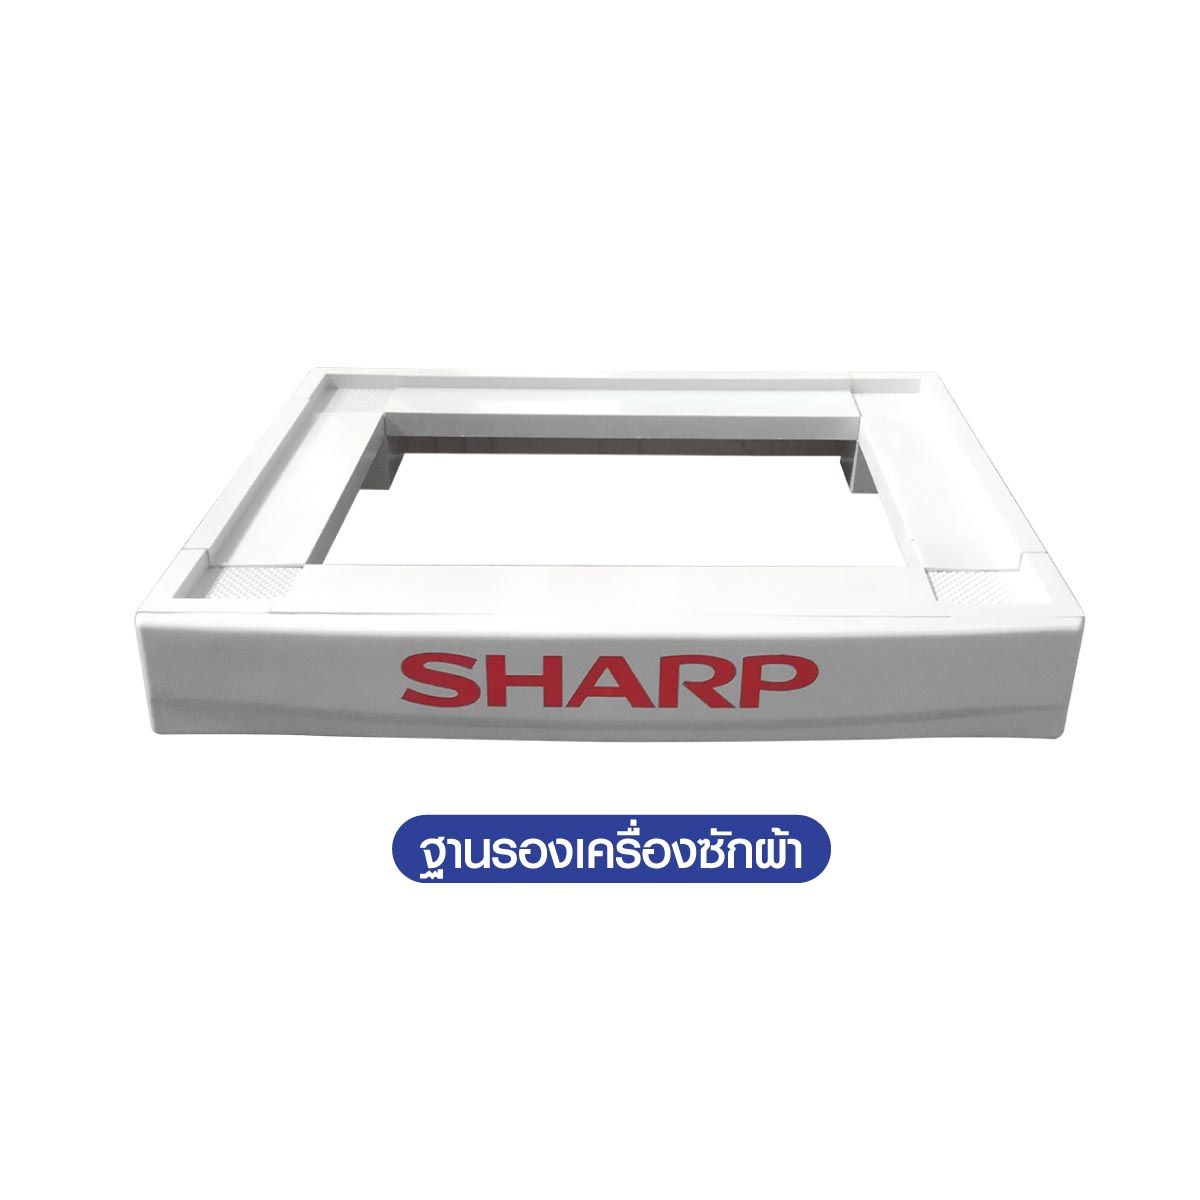 SHARP เครื่องซักผ้าฝาหน้า 10Kg INVERTER,HONOR SE Series สีขาว รุ่น ES-FH10BT-W